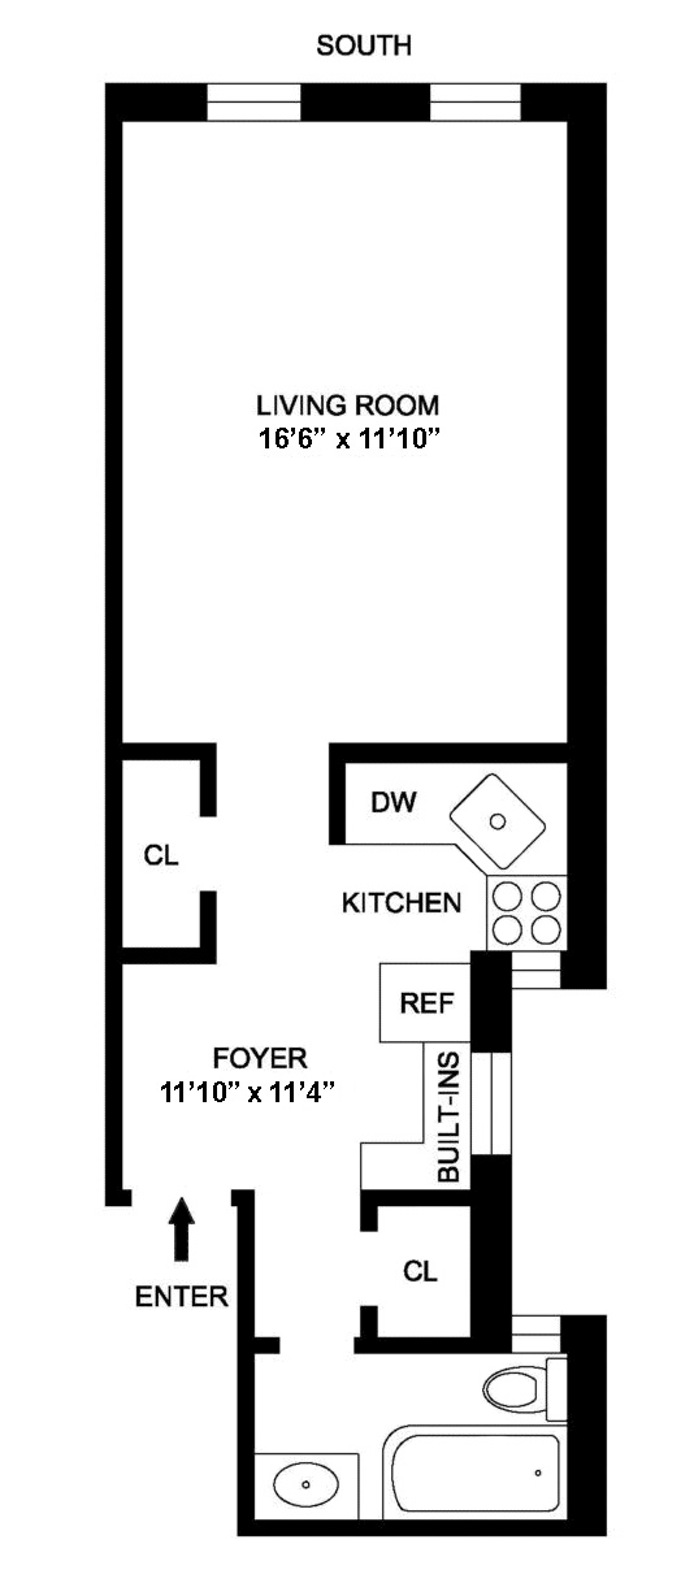 Floorplan for 343 East 51st Street